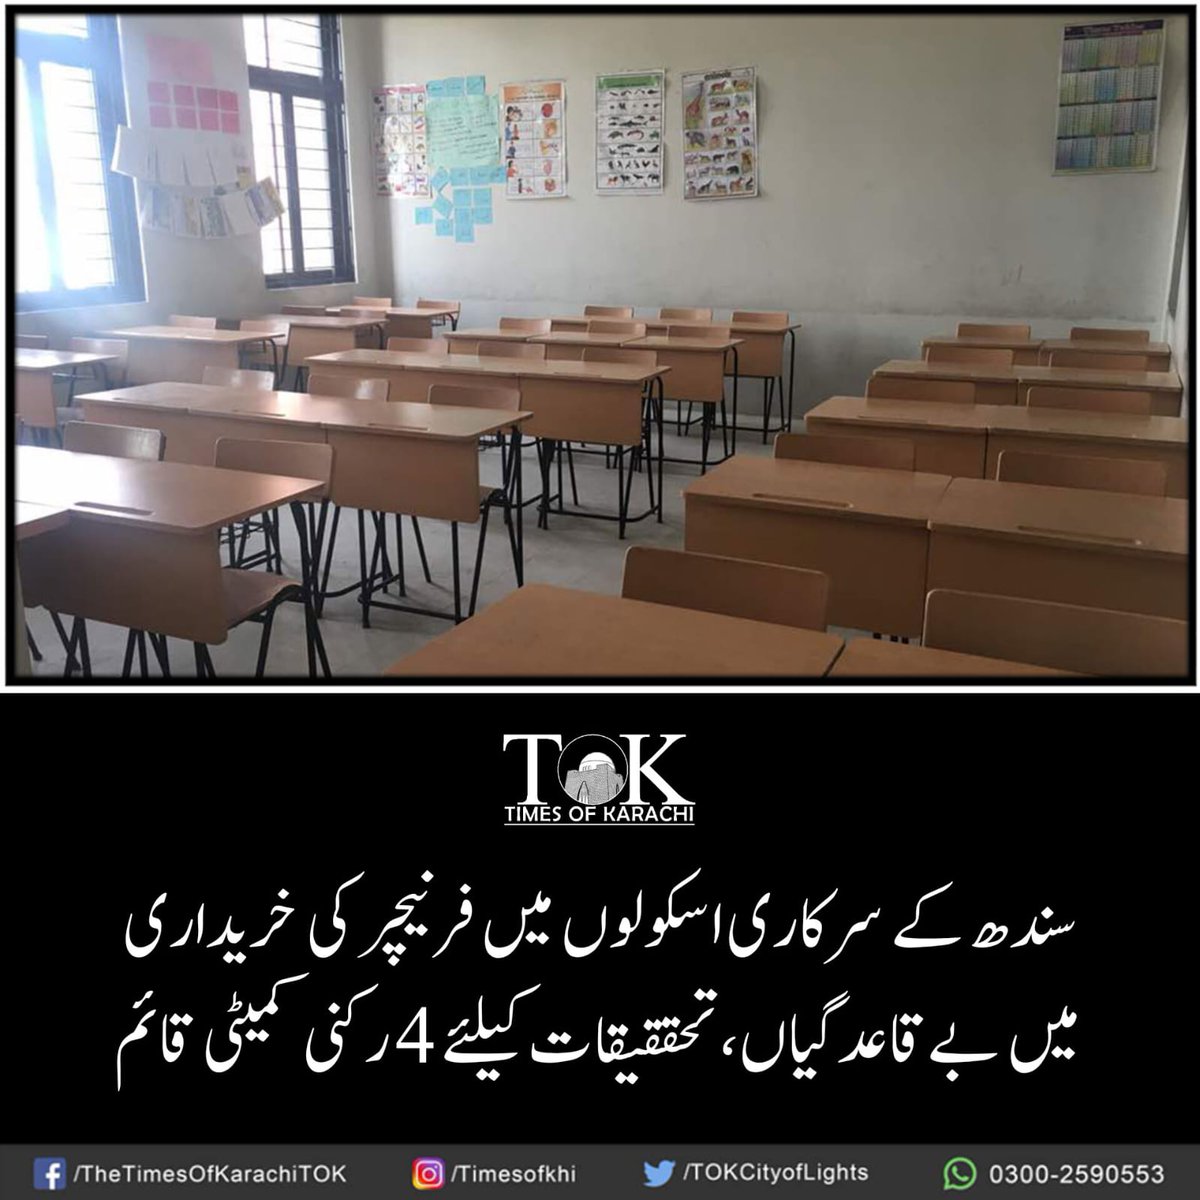 تفصیلات، bit.ly/3RNPmgN

#TOKAlert #Sindh #SchoolFurniture #Corruption